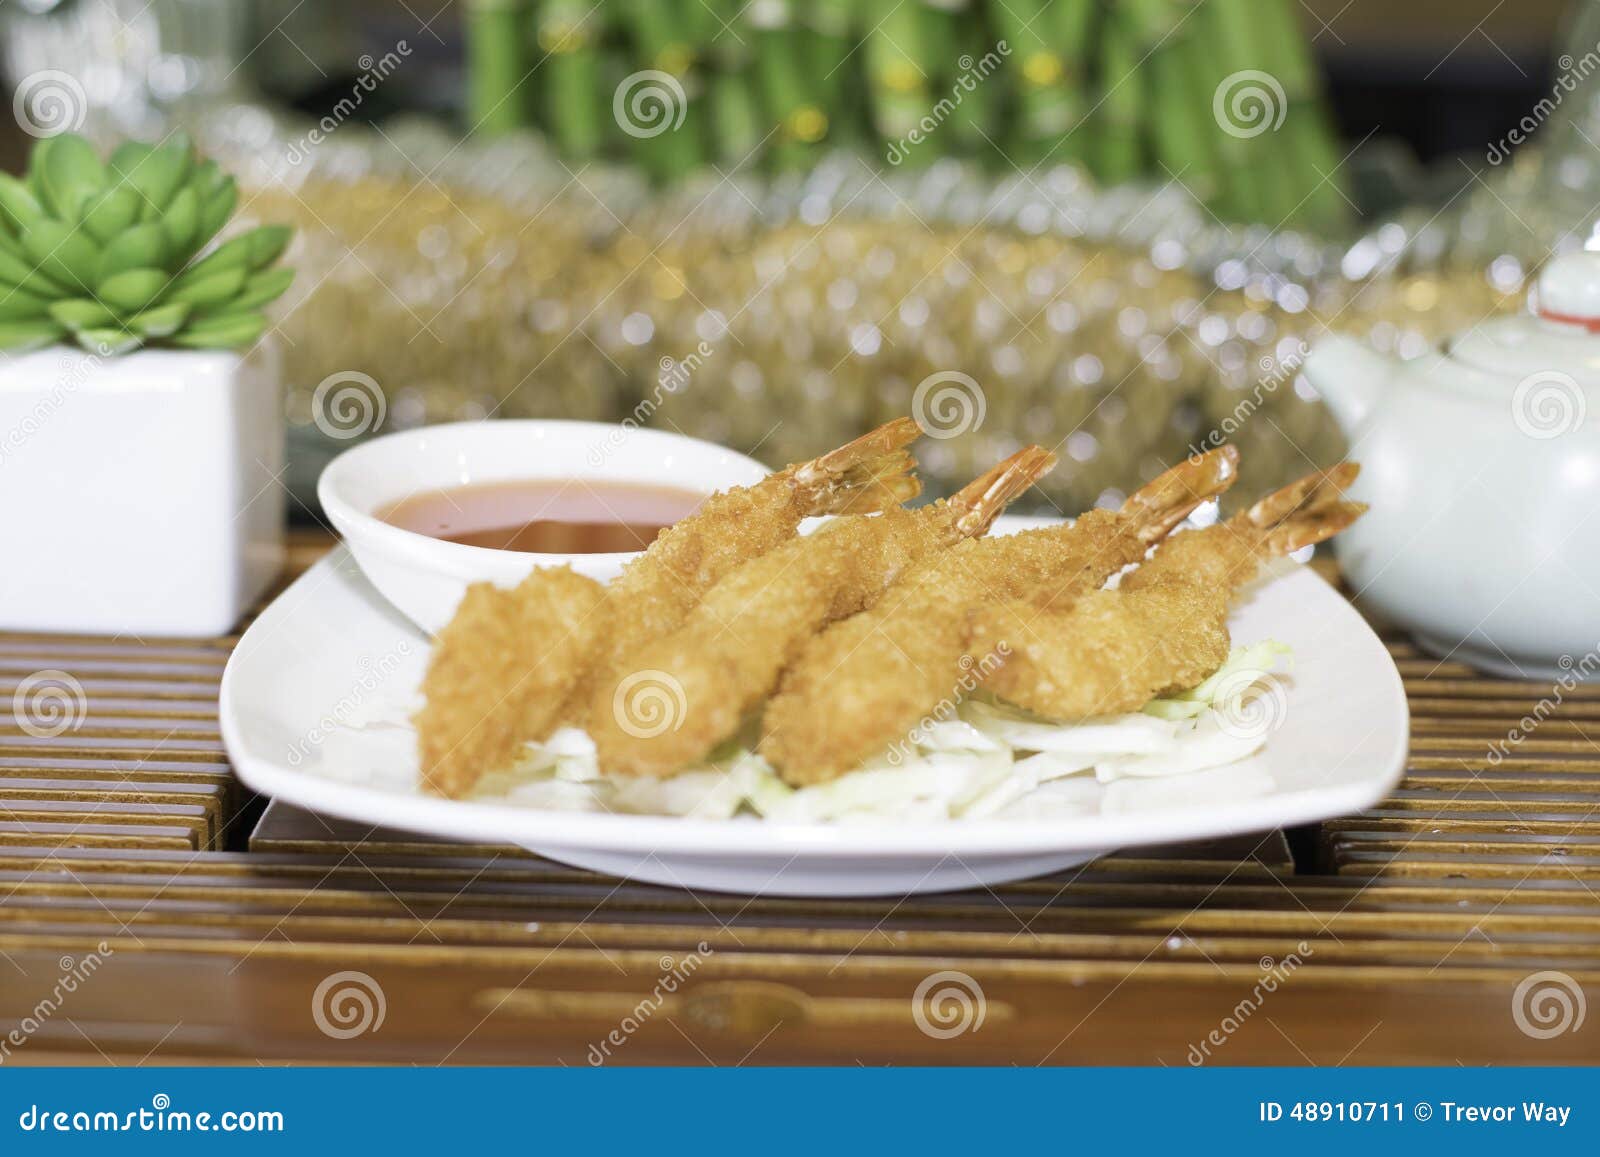 Fried Shrimp stock image. Image of flavored, shrimp, dish - 48910711